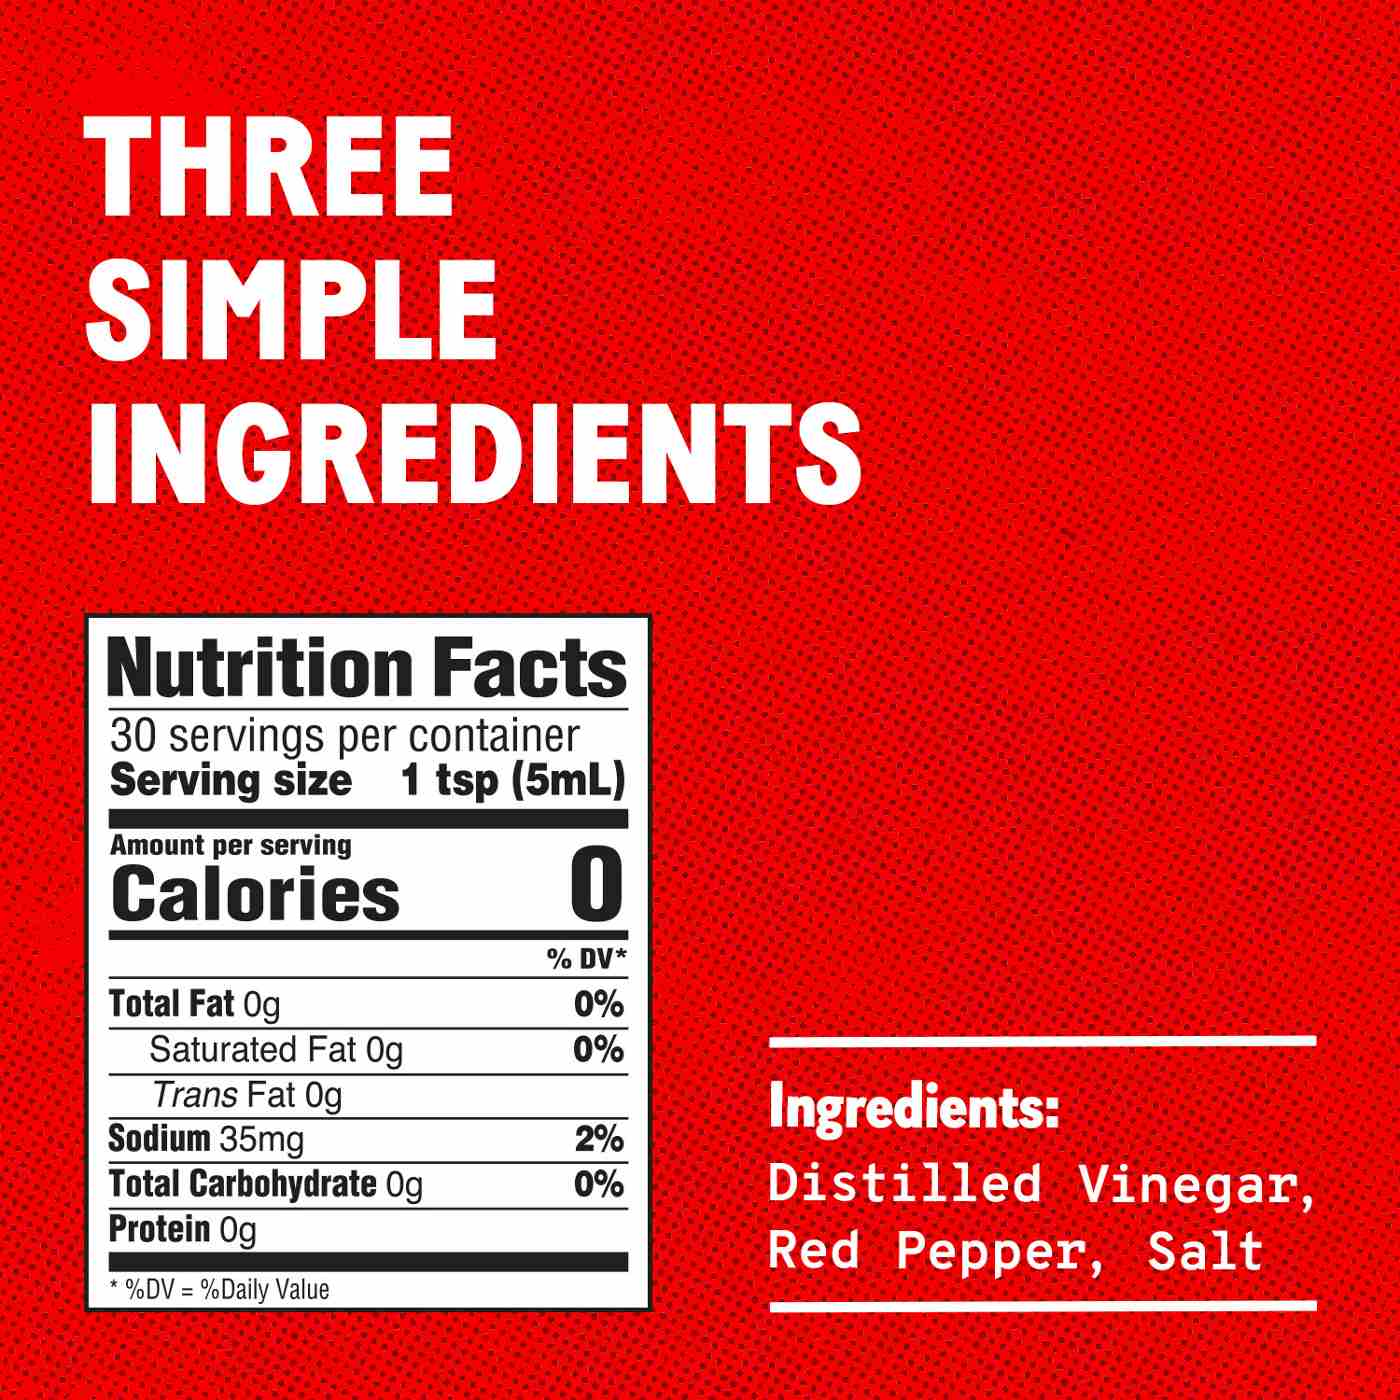 Tabasco Original Red Pepper Sauce; image 5 of 8